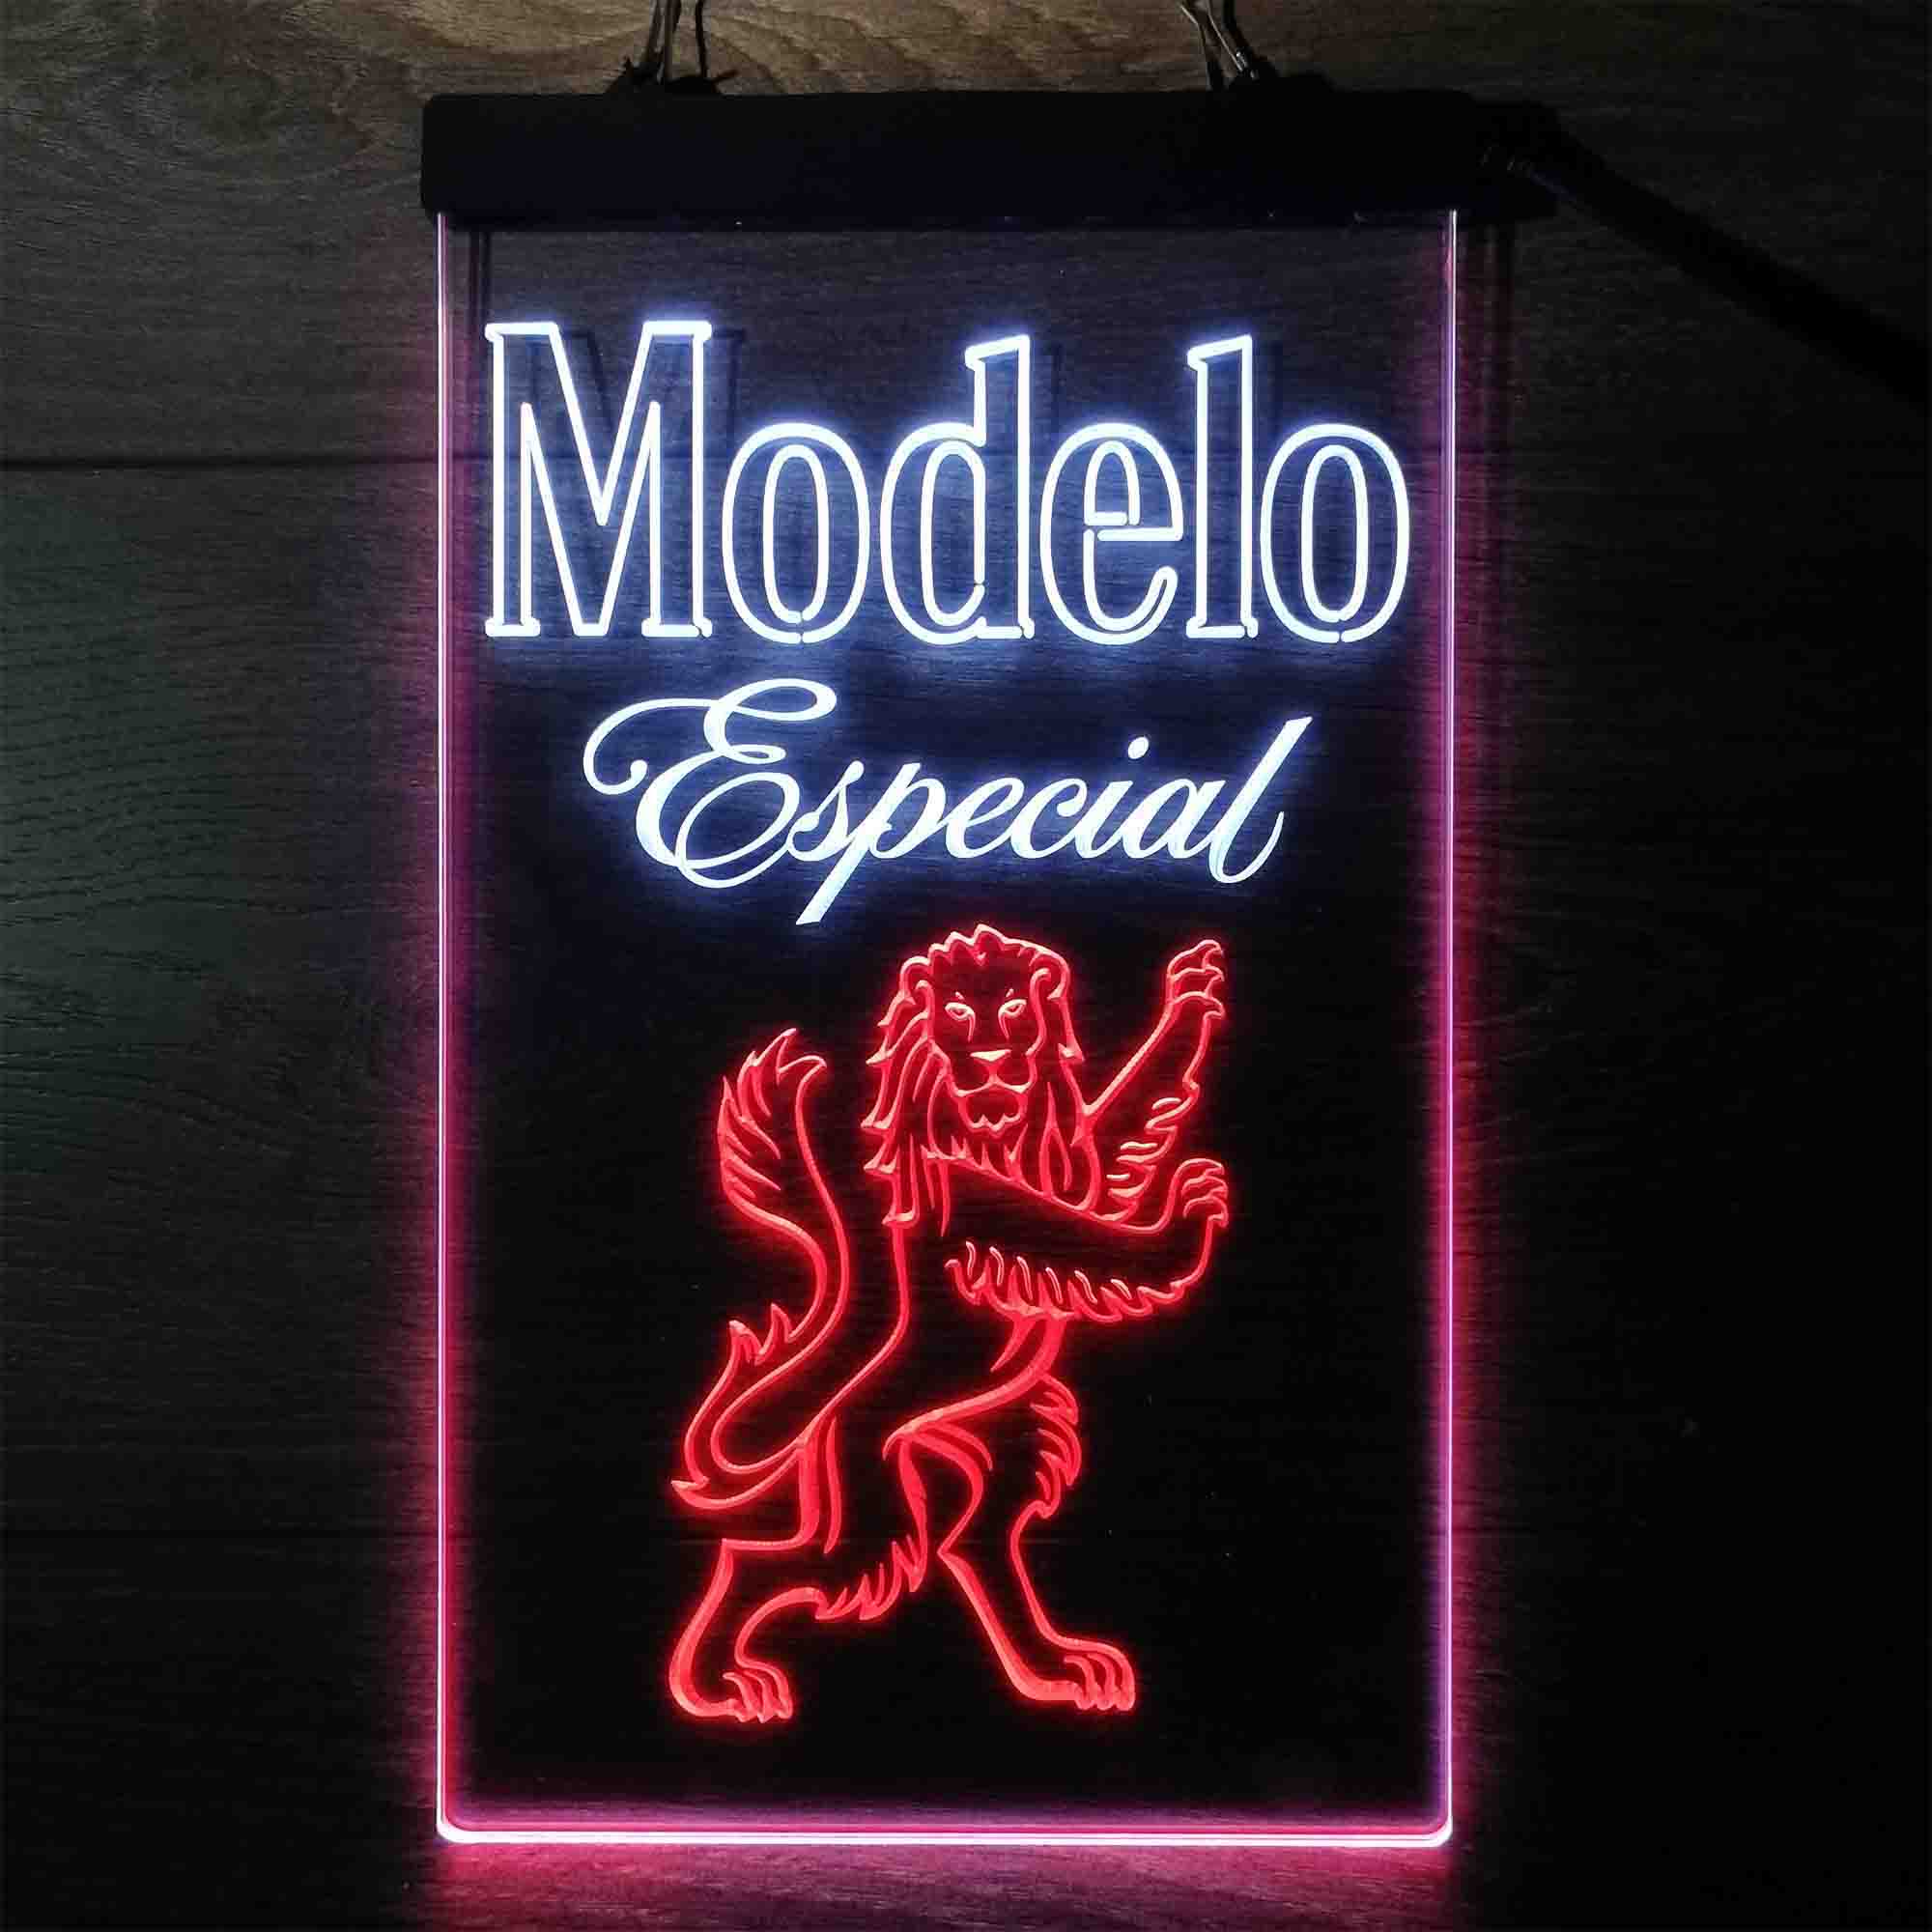 Modelo Especial Vertical Neon-Like LED Sign